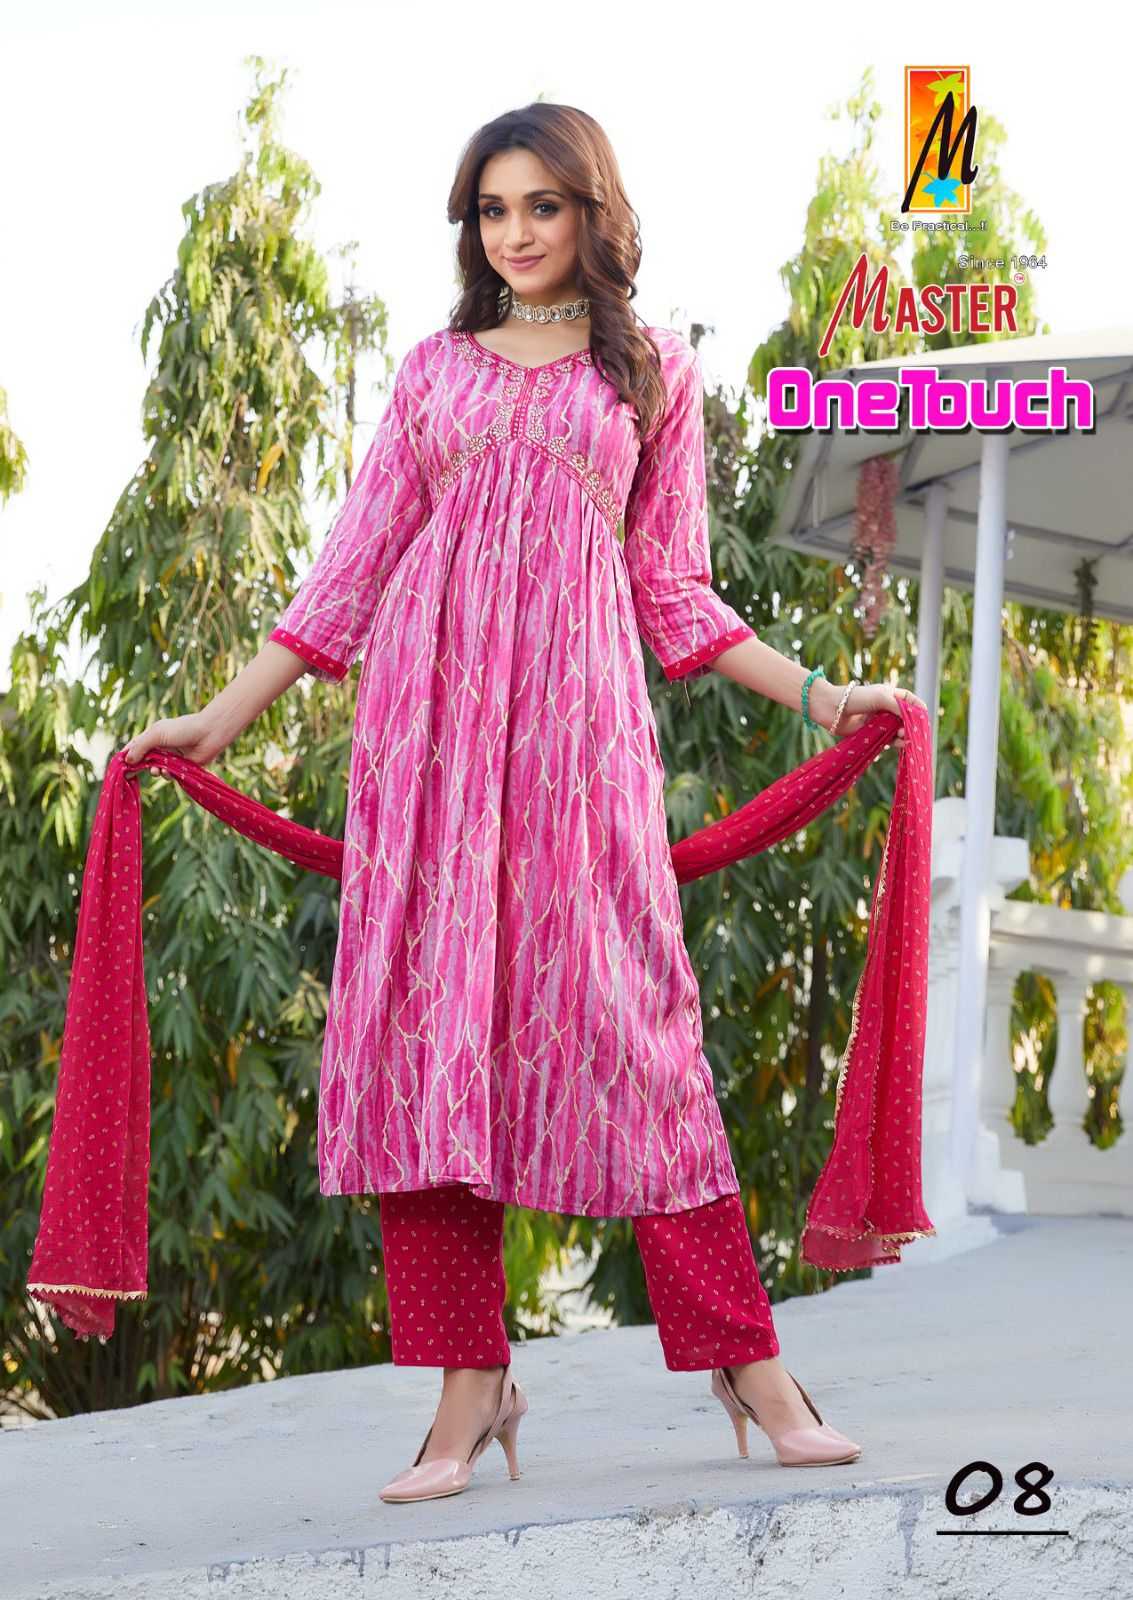 master presents one touch new trendy aaliya cut rayon full stitch salwar kameez 